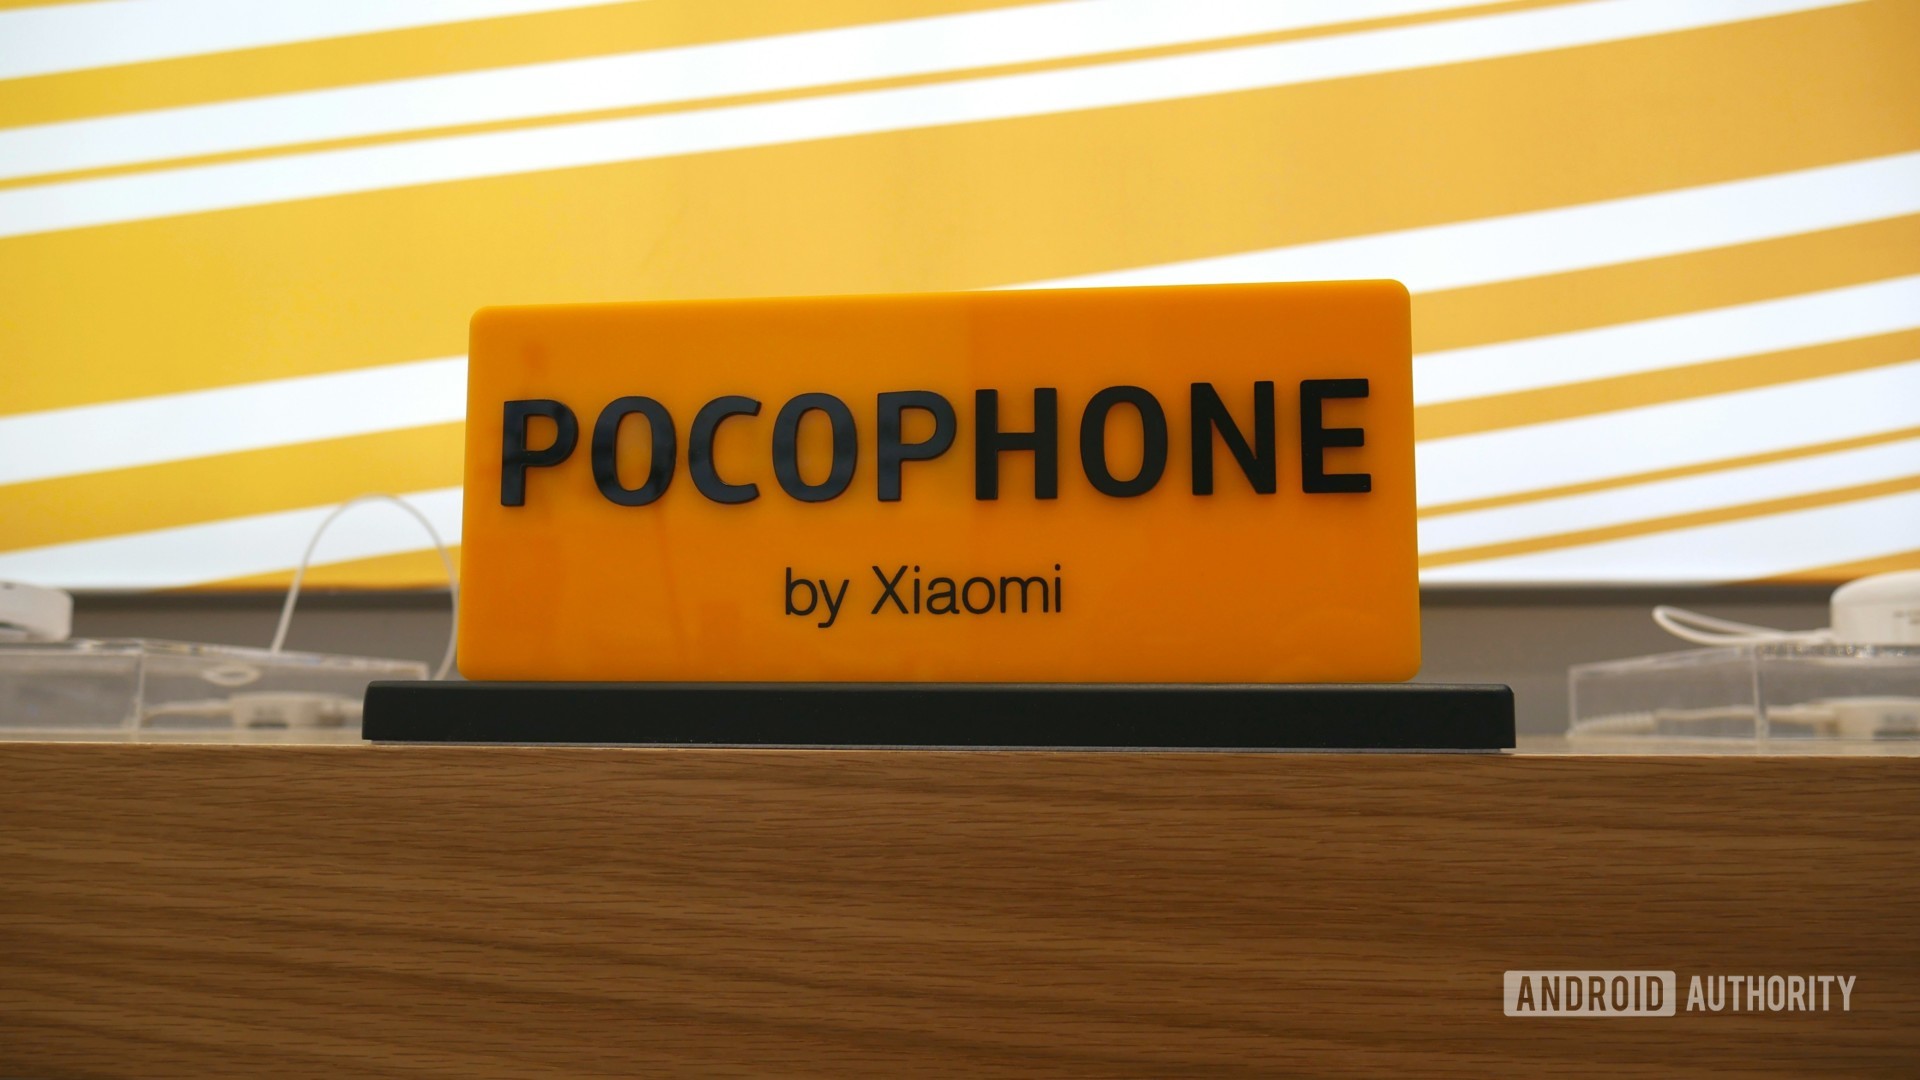 Pocophone logo on desk - is the Redmi K20 Pro the Pocophone F2